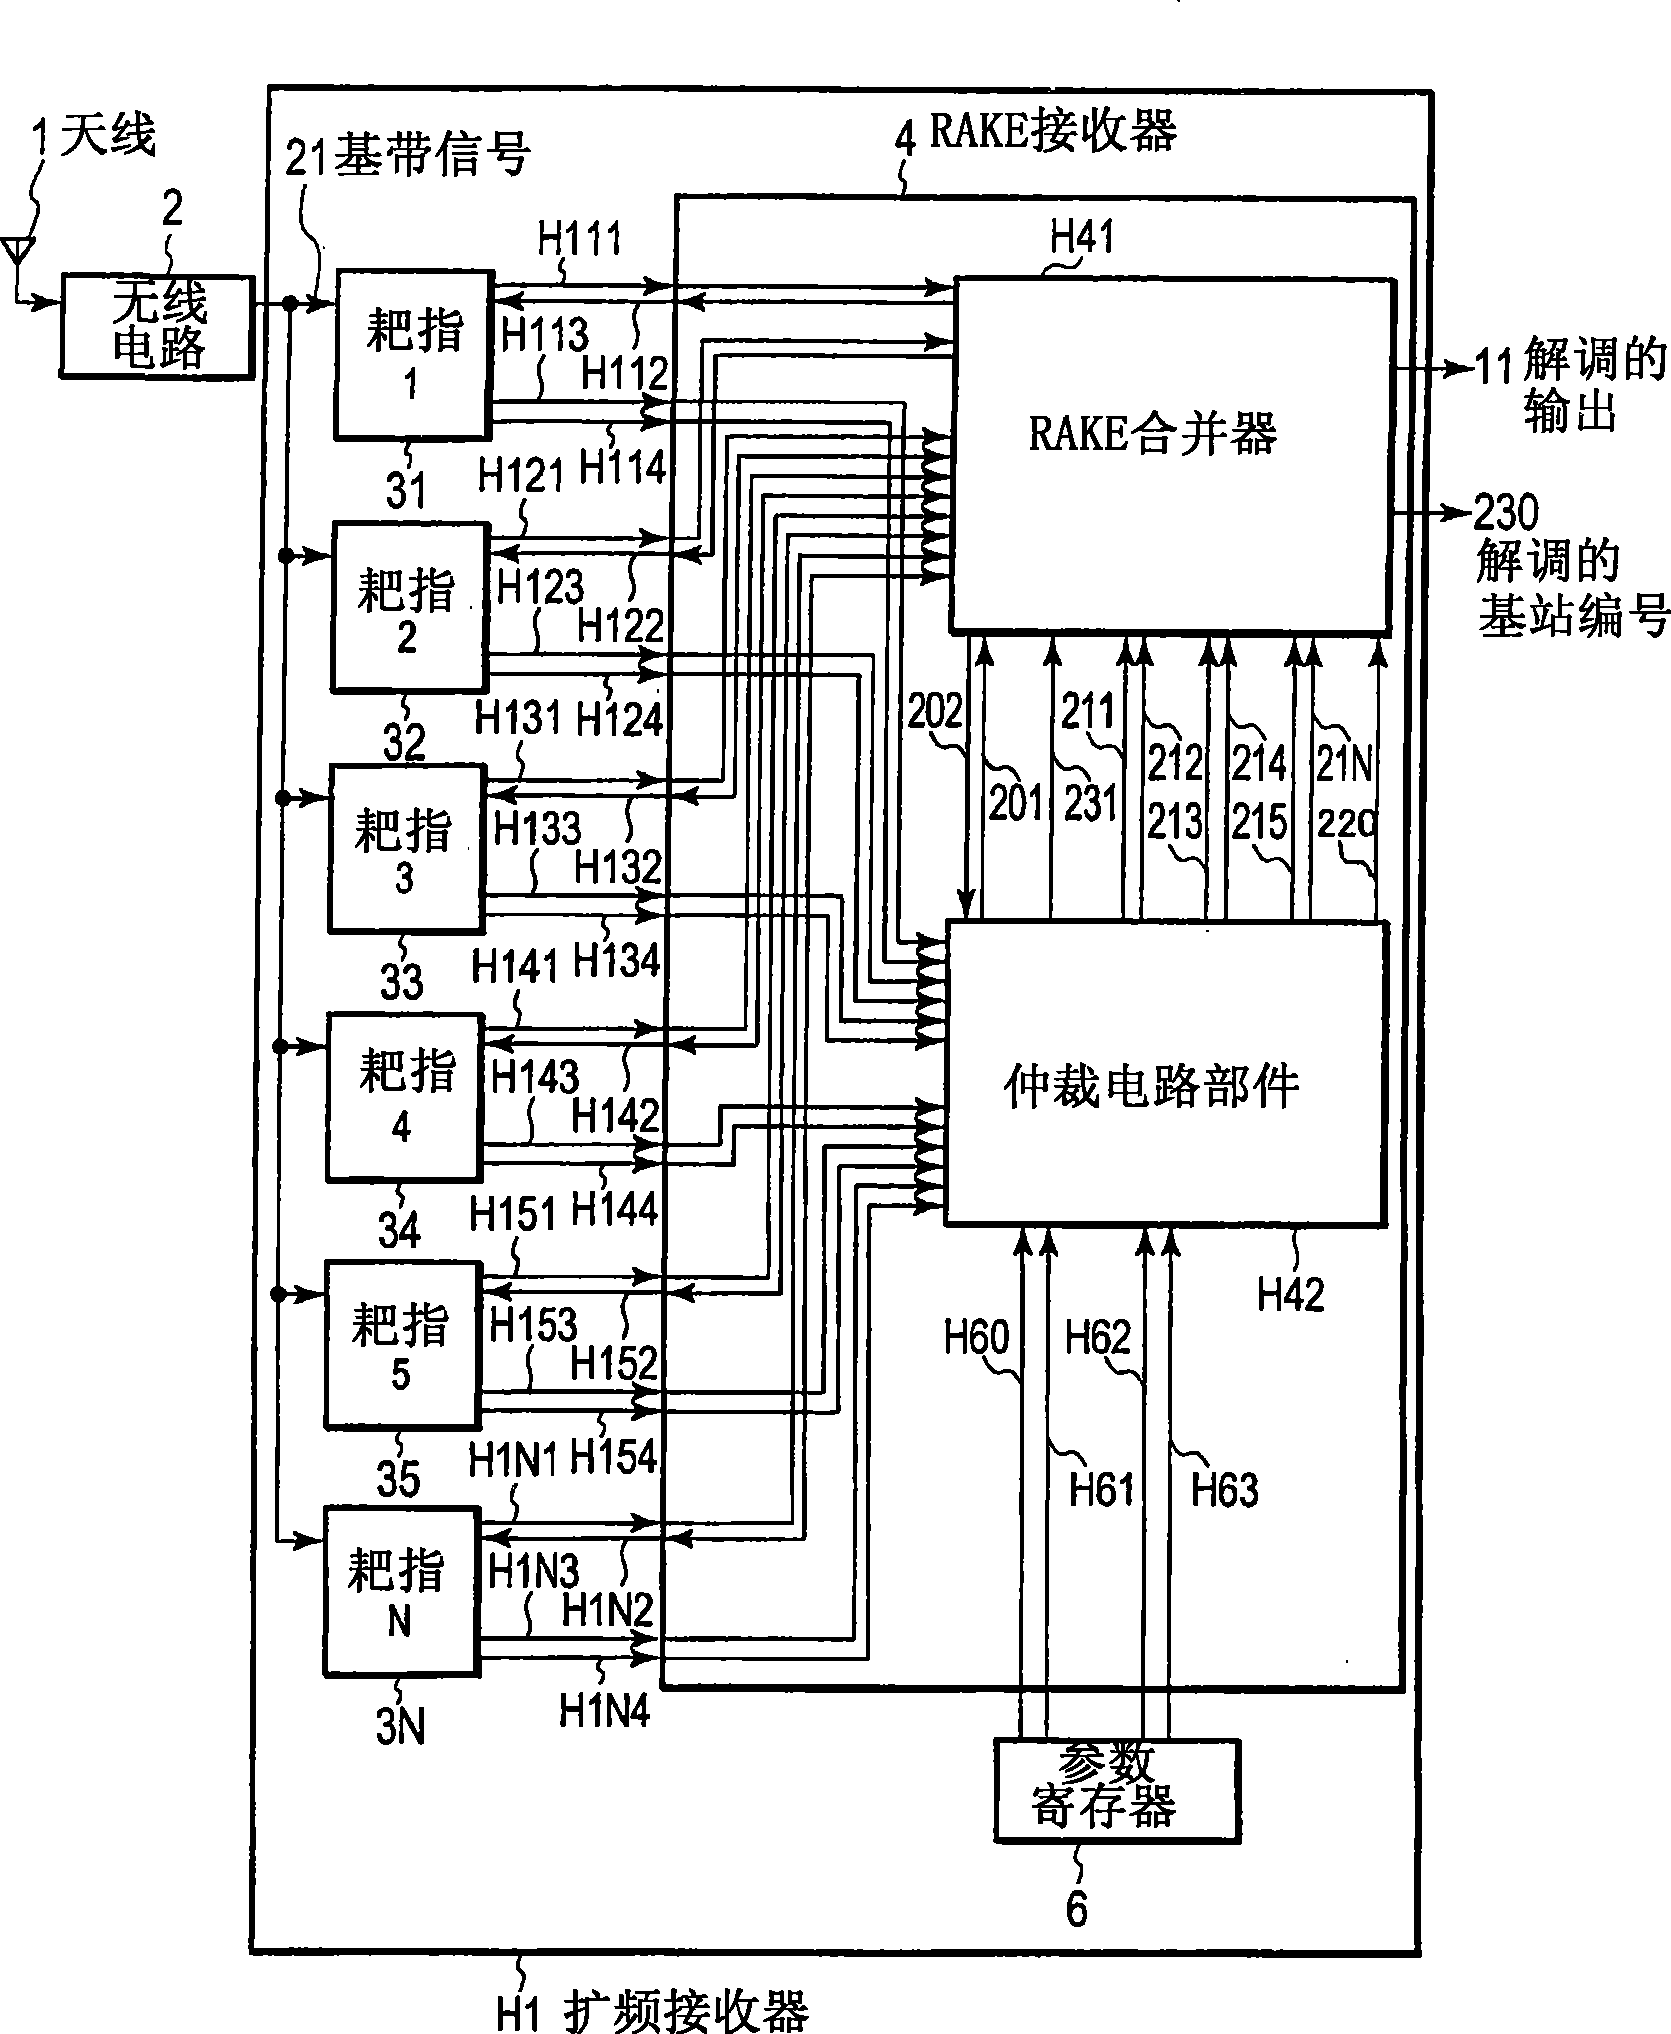 Spread-spectrum receiver